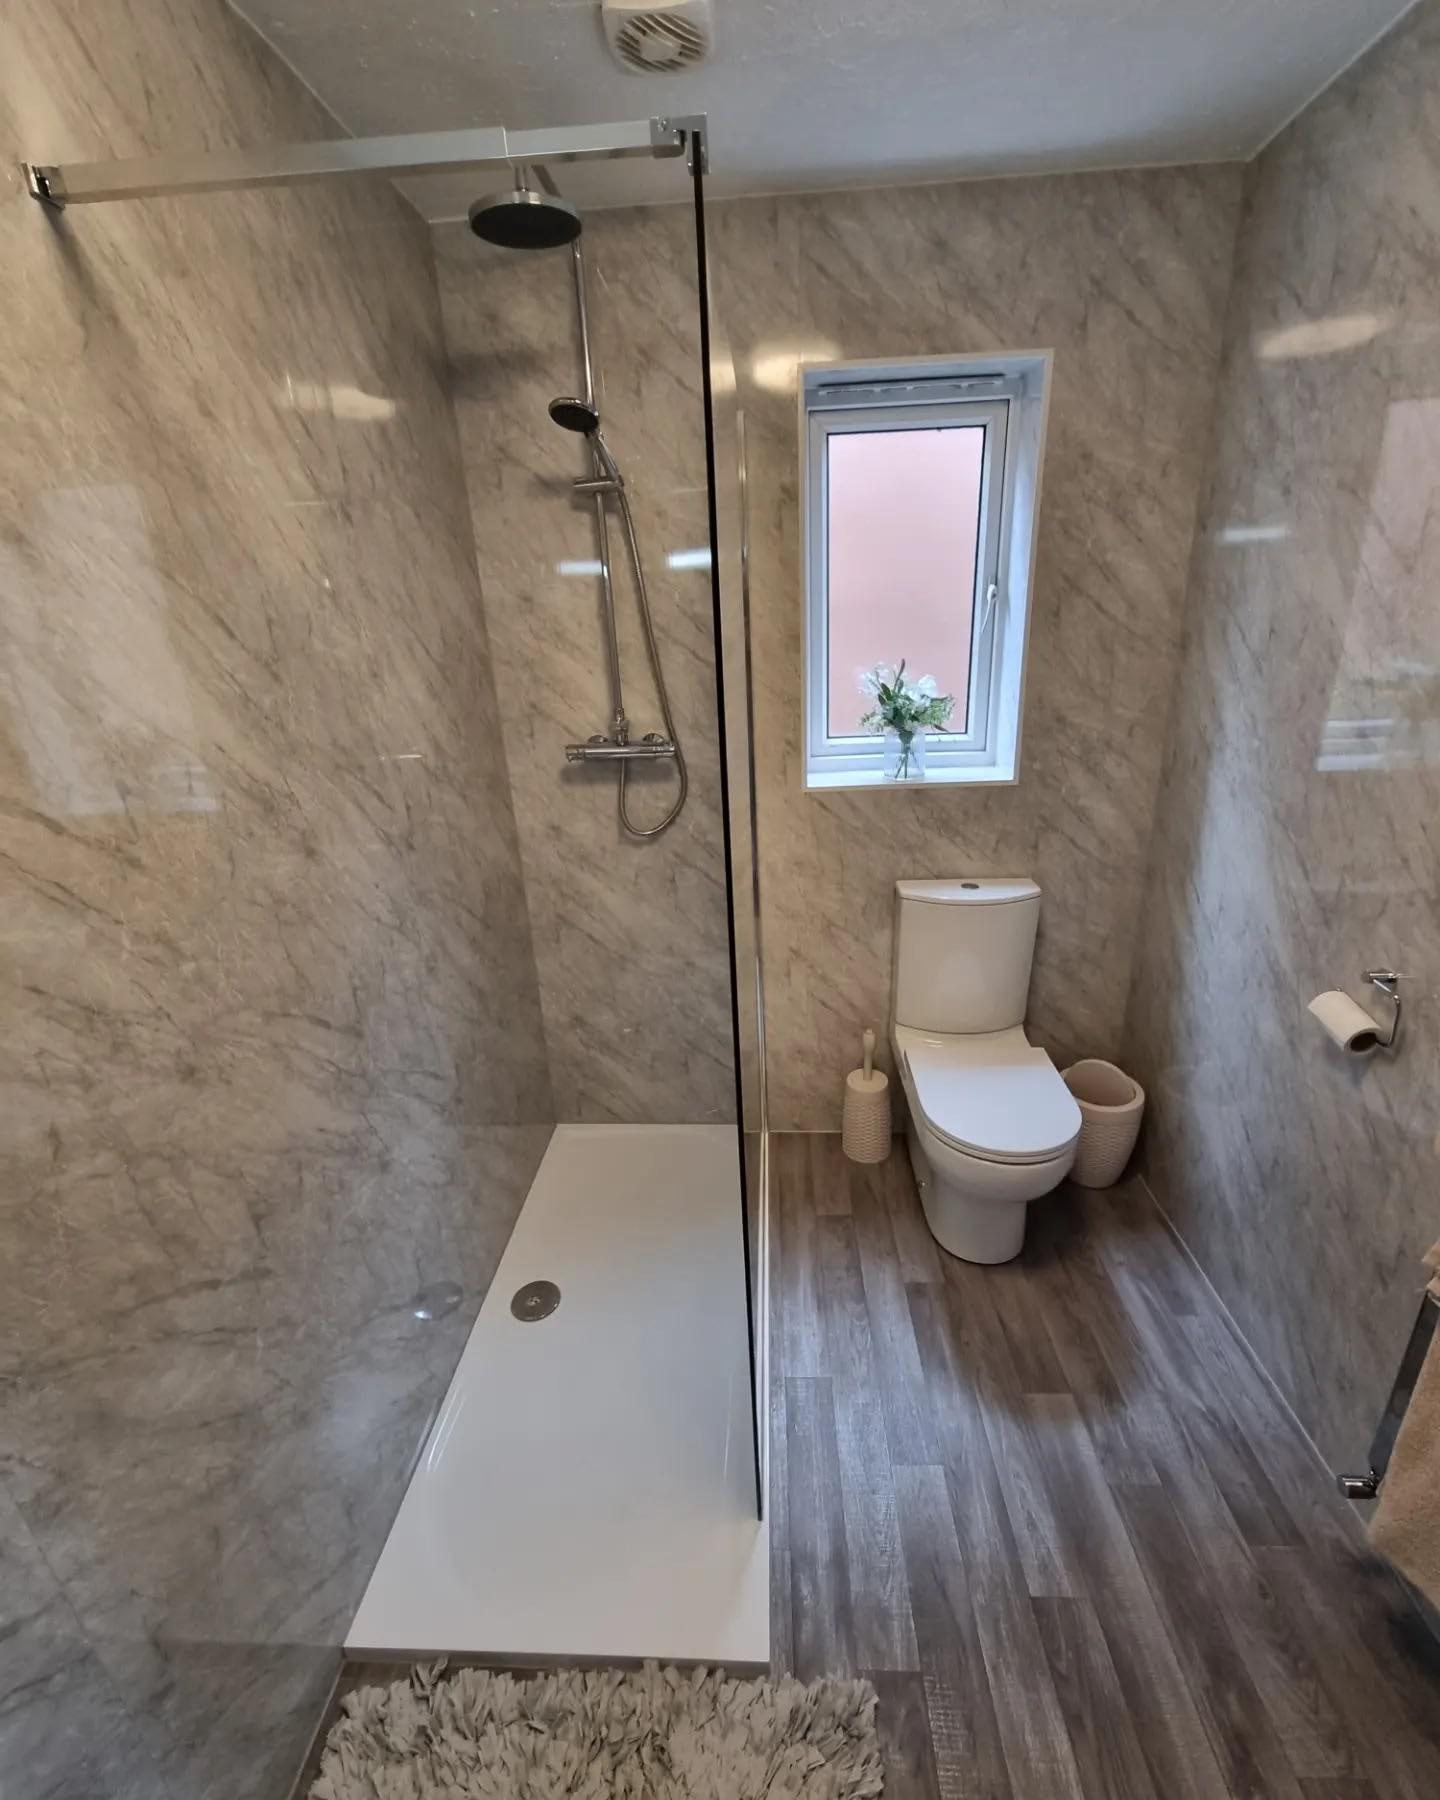 LG Bathrooms Scunthorpe 07722 025546